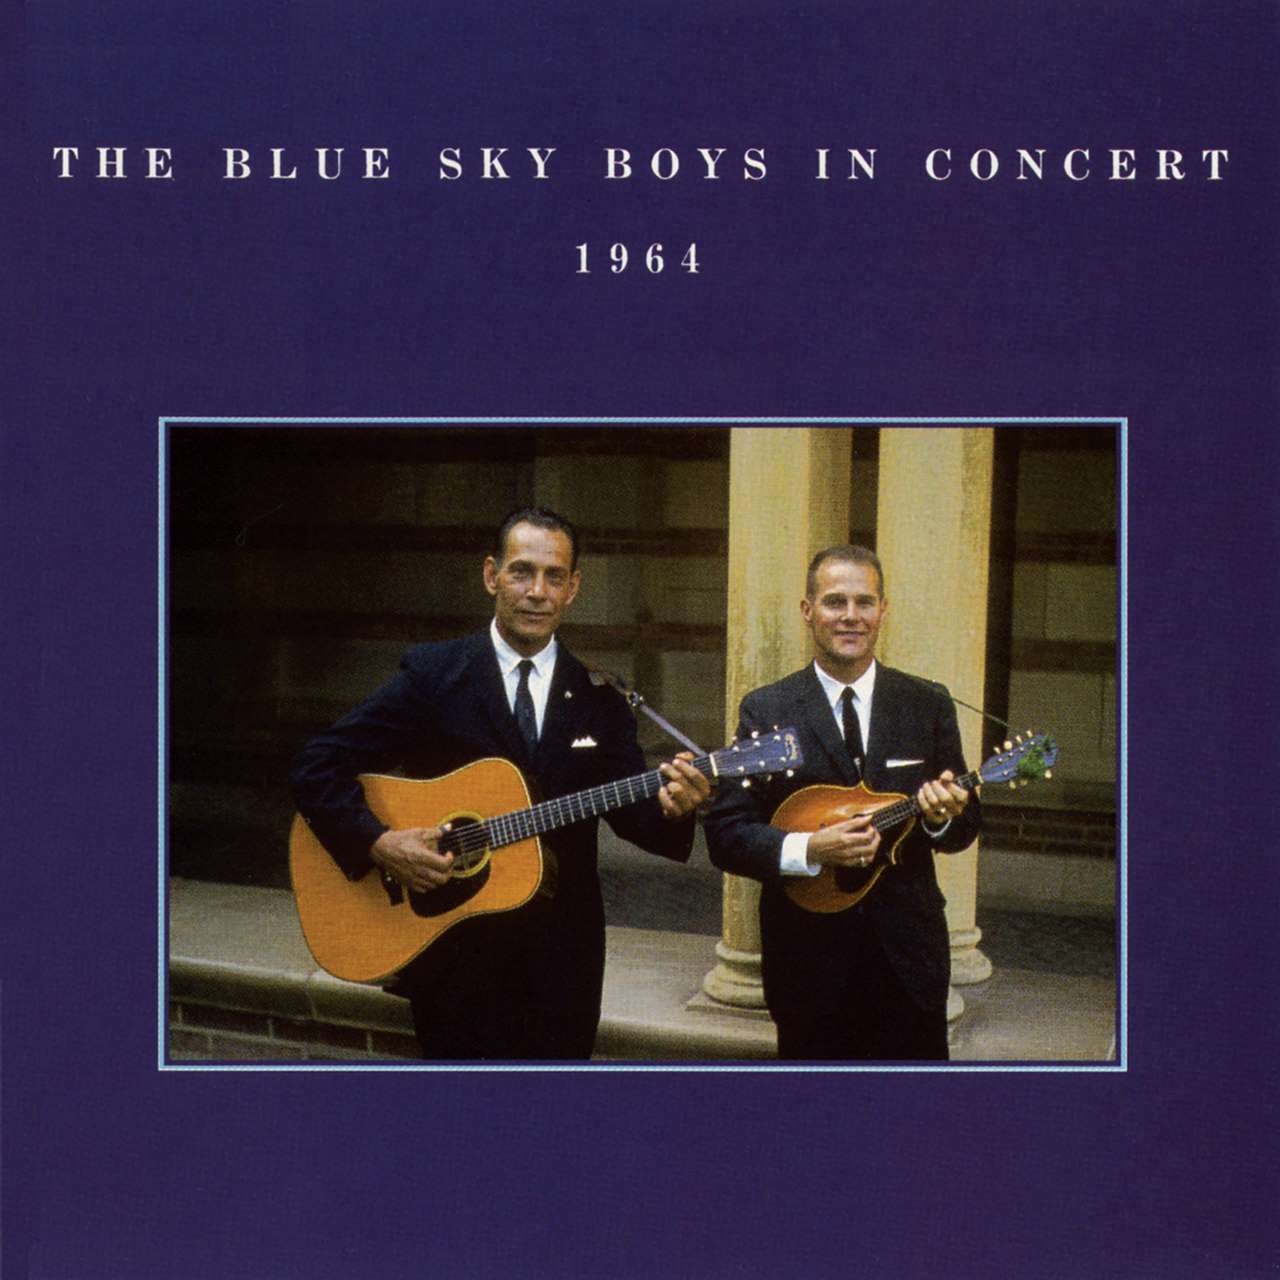 Blue Sky Boys - In Concert 1964 cover album